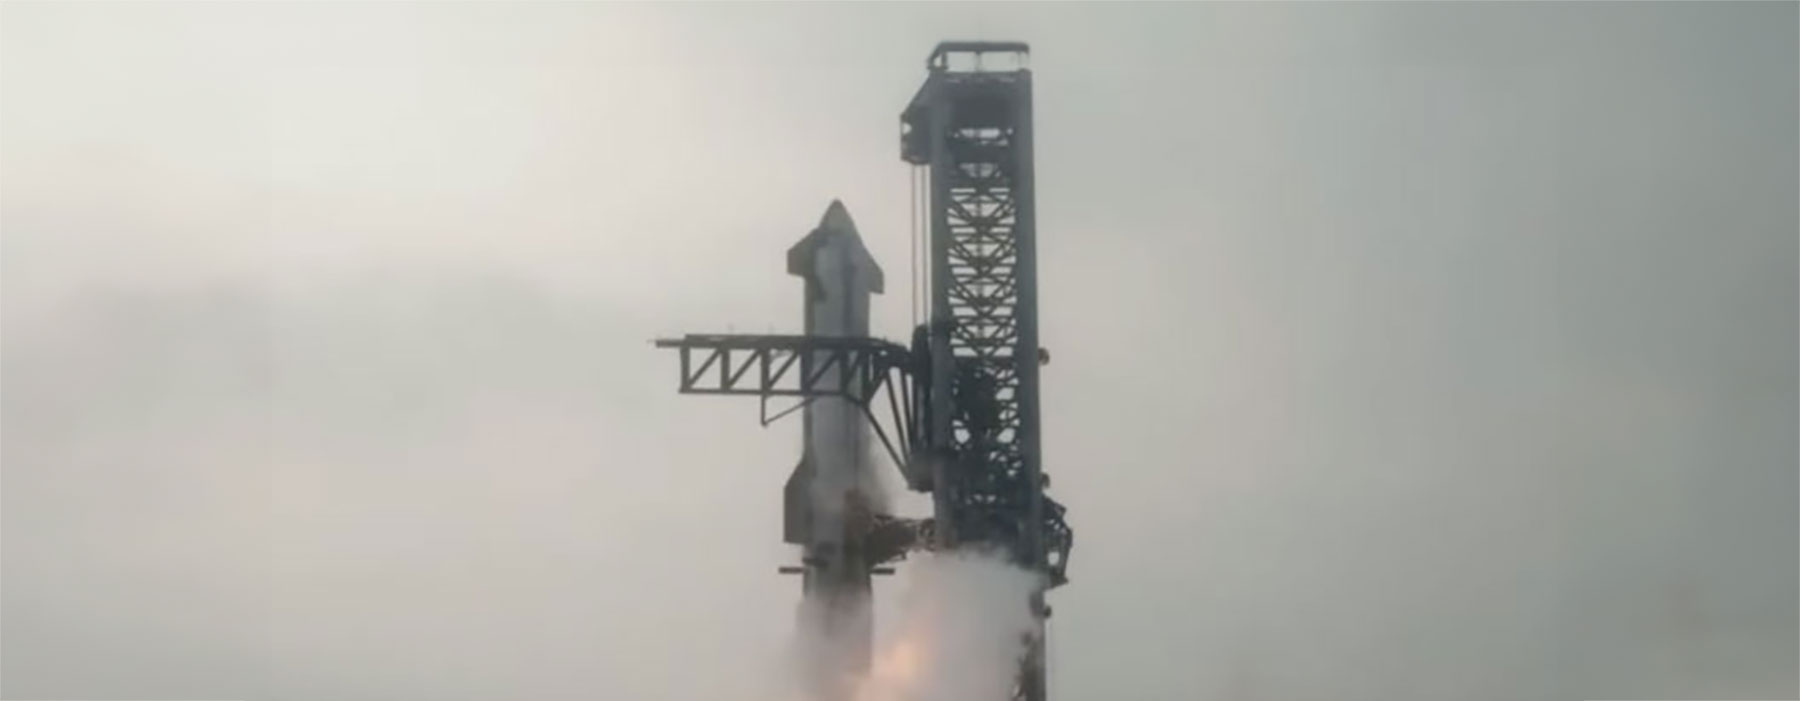 AIAA Statement on Fourth SpaceX Starship Test Flight